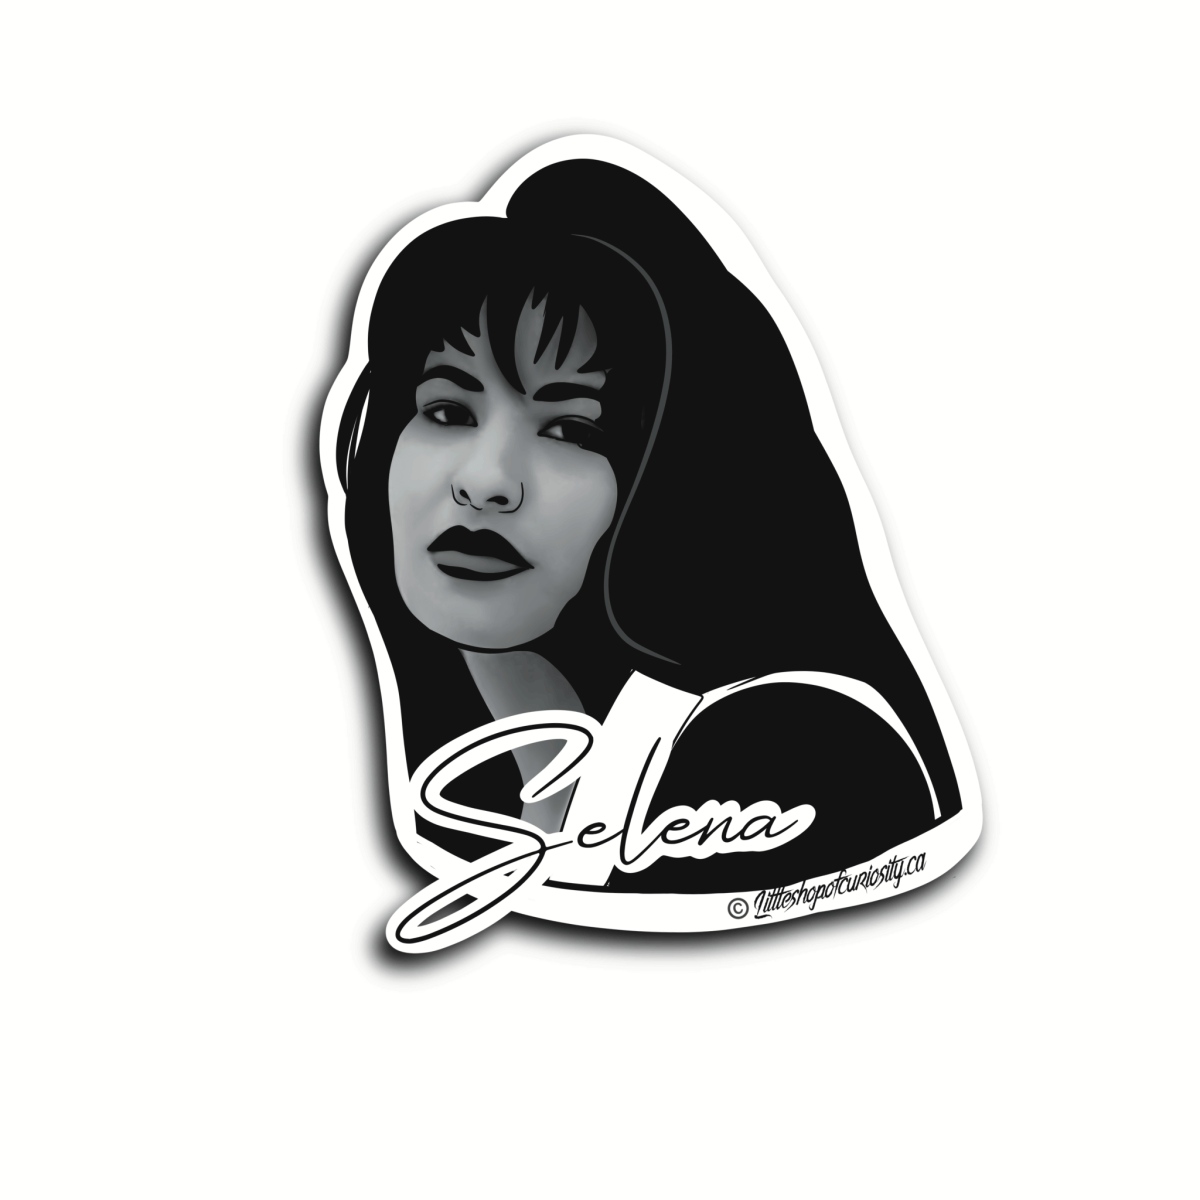 Selena Sticker - Black & White Sticker - Little Shop of Curiosity